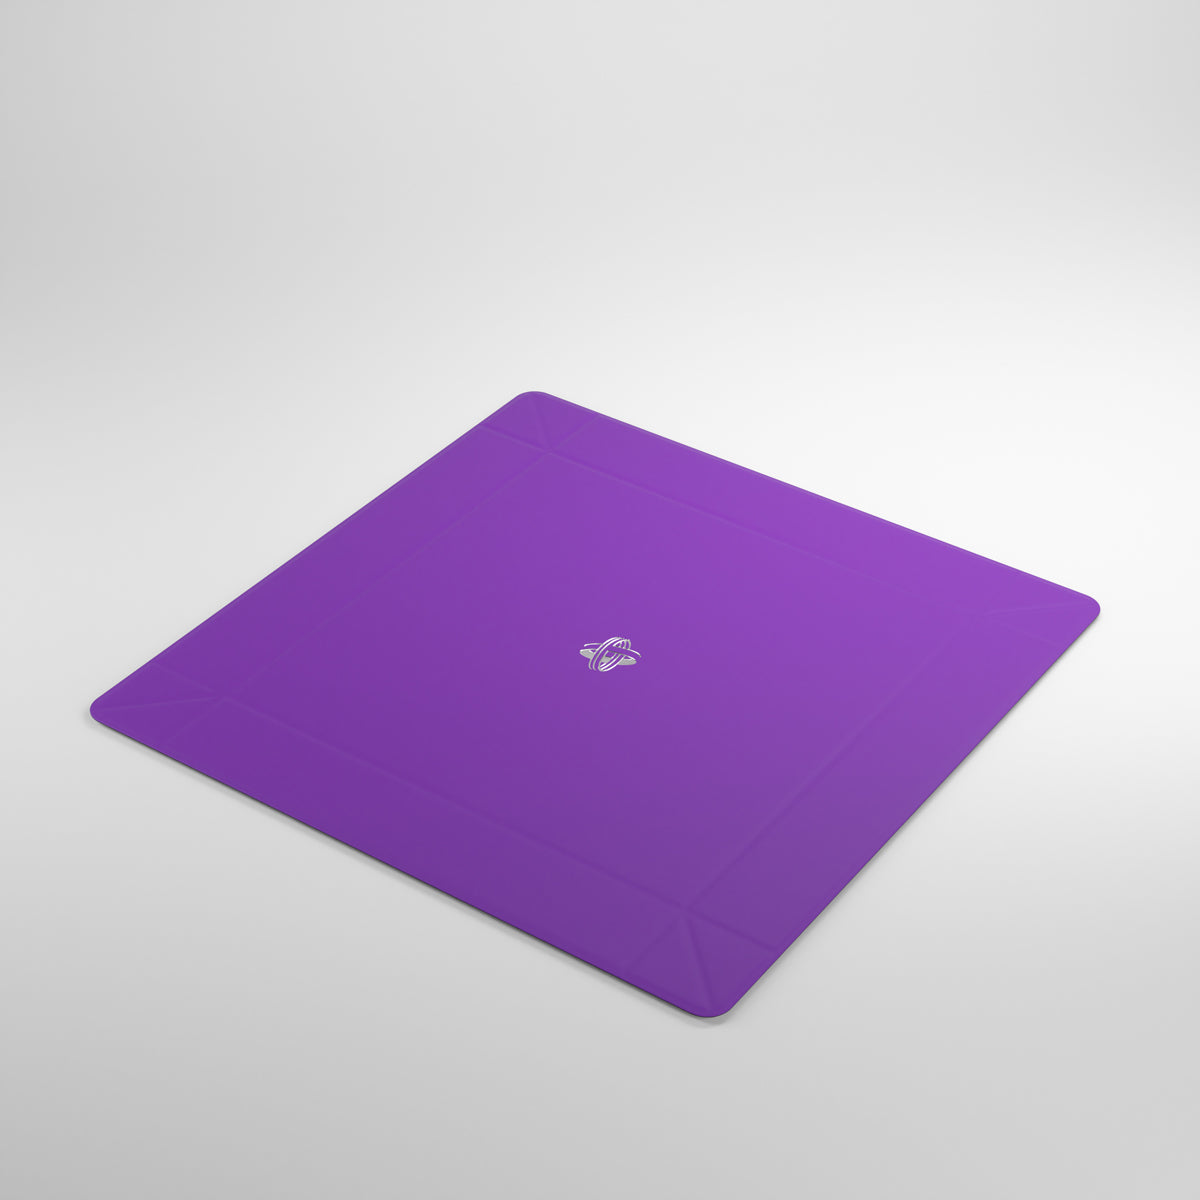 Magnetic Dice Tray Square Black/Purple